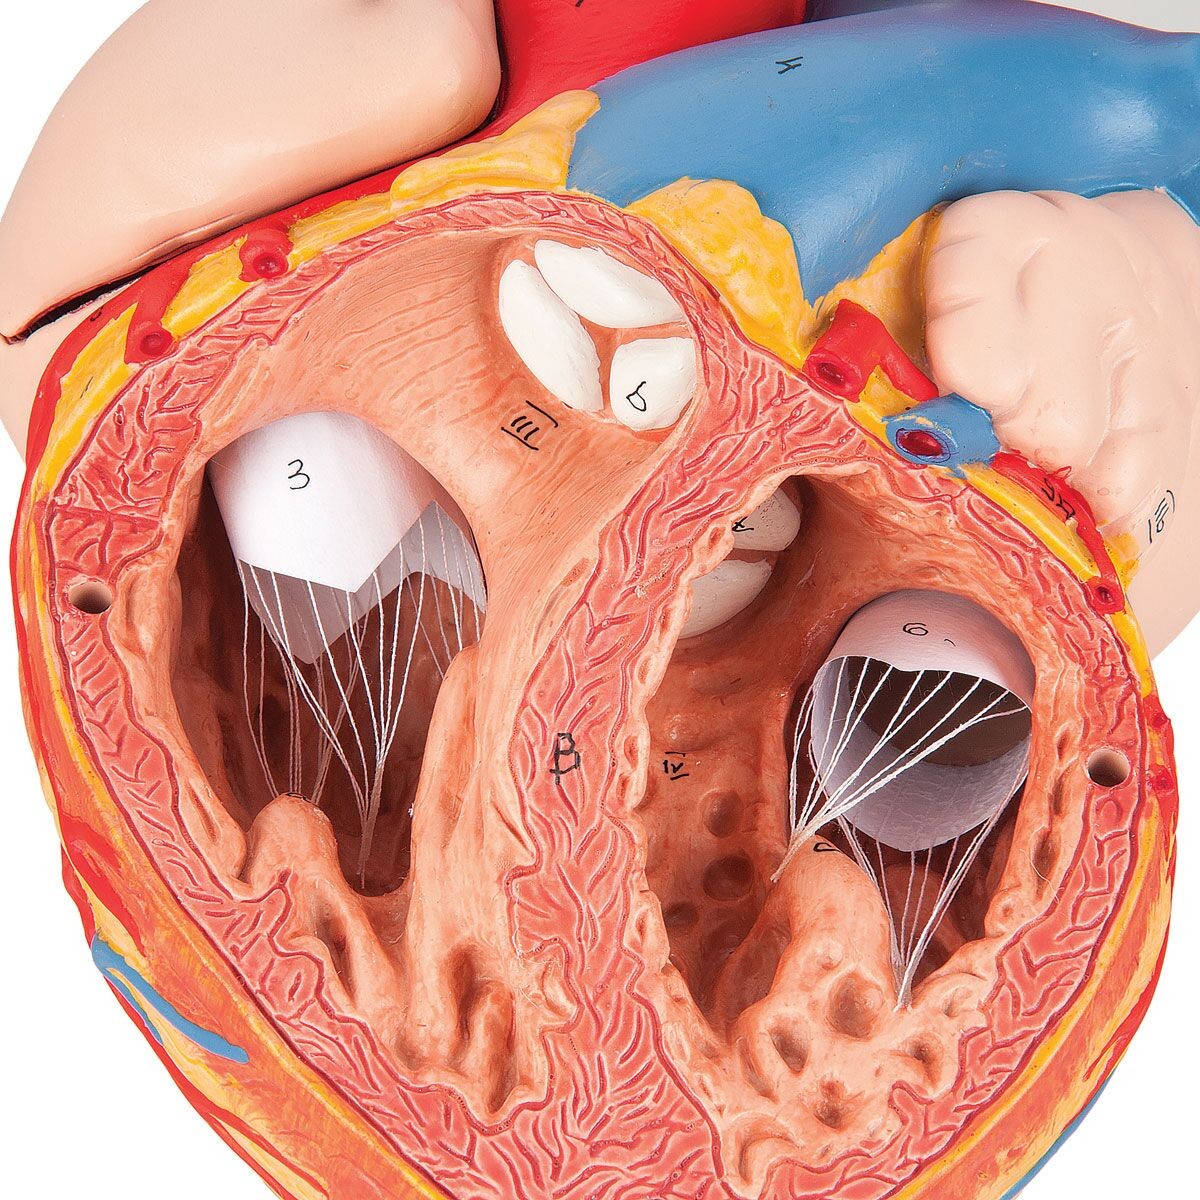 3B Heart Model - Circulatory System - Human Anatomy - Biology